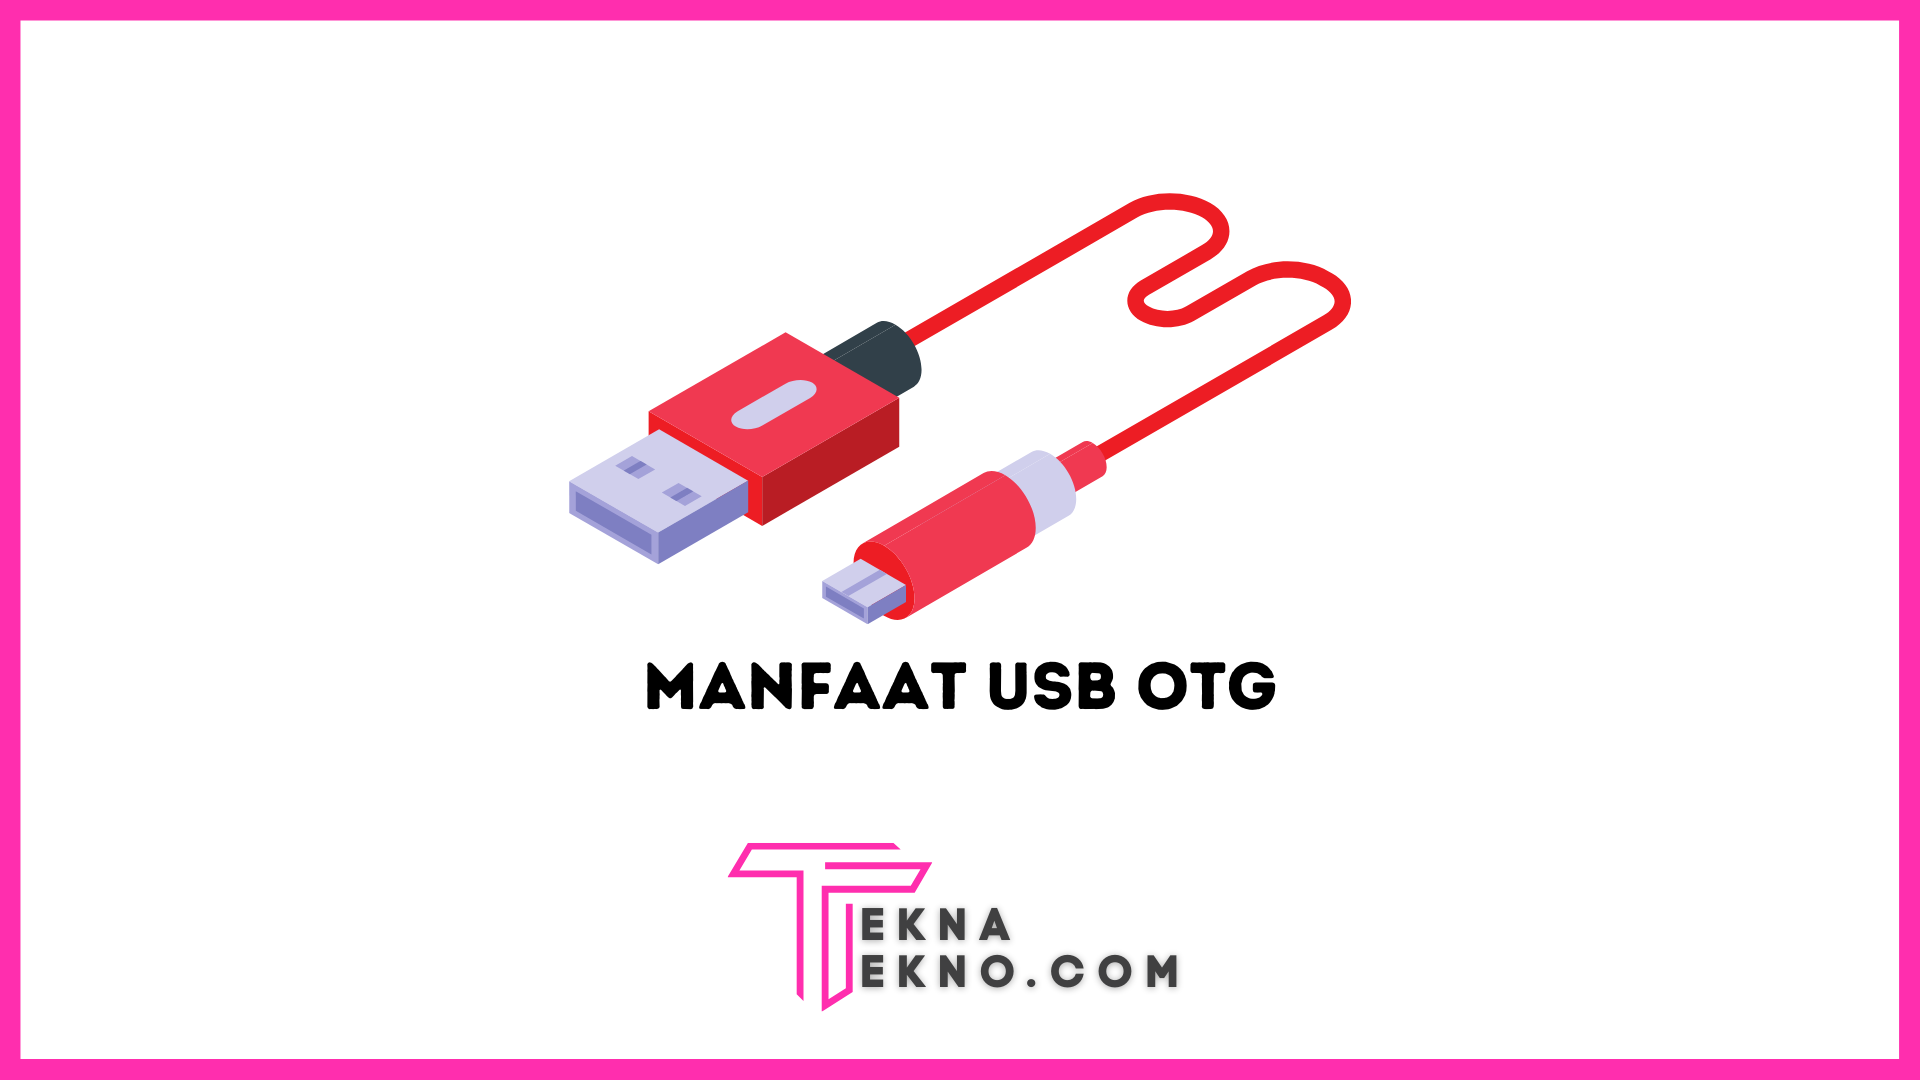 7 Manfaat USB OTG yang Perlu Kamu Ketahui